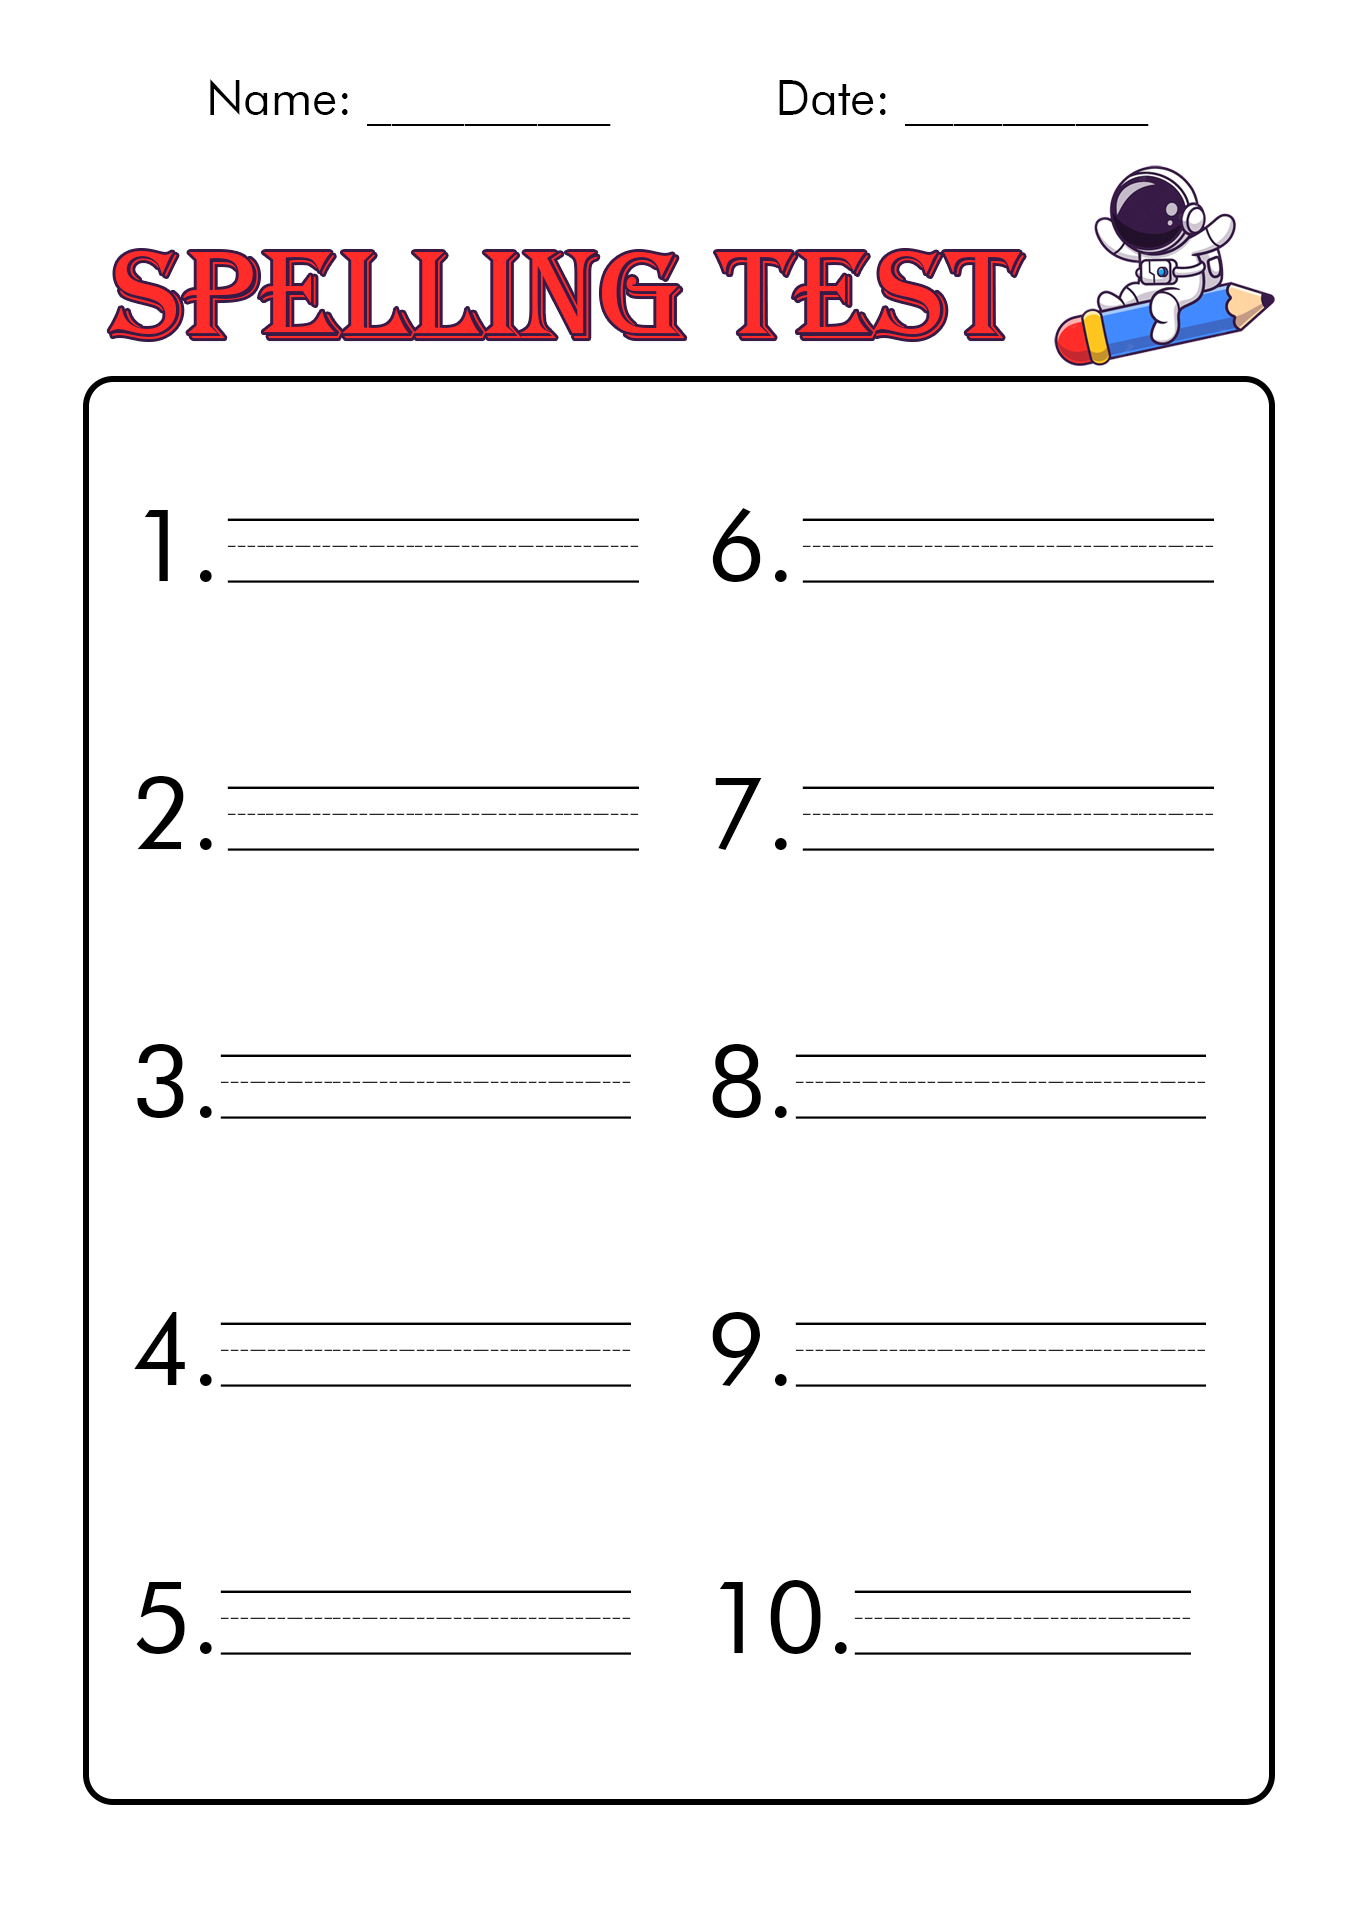 spelling-test-paper-printable